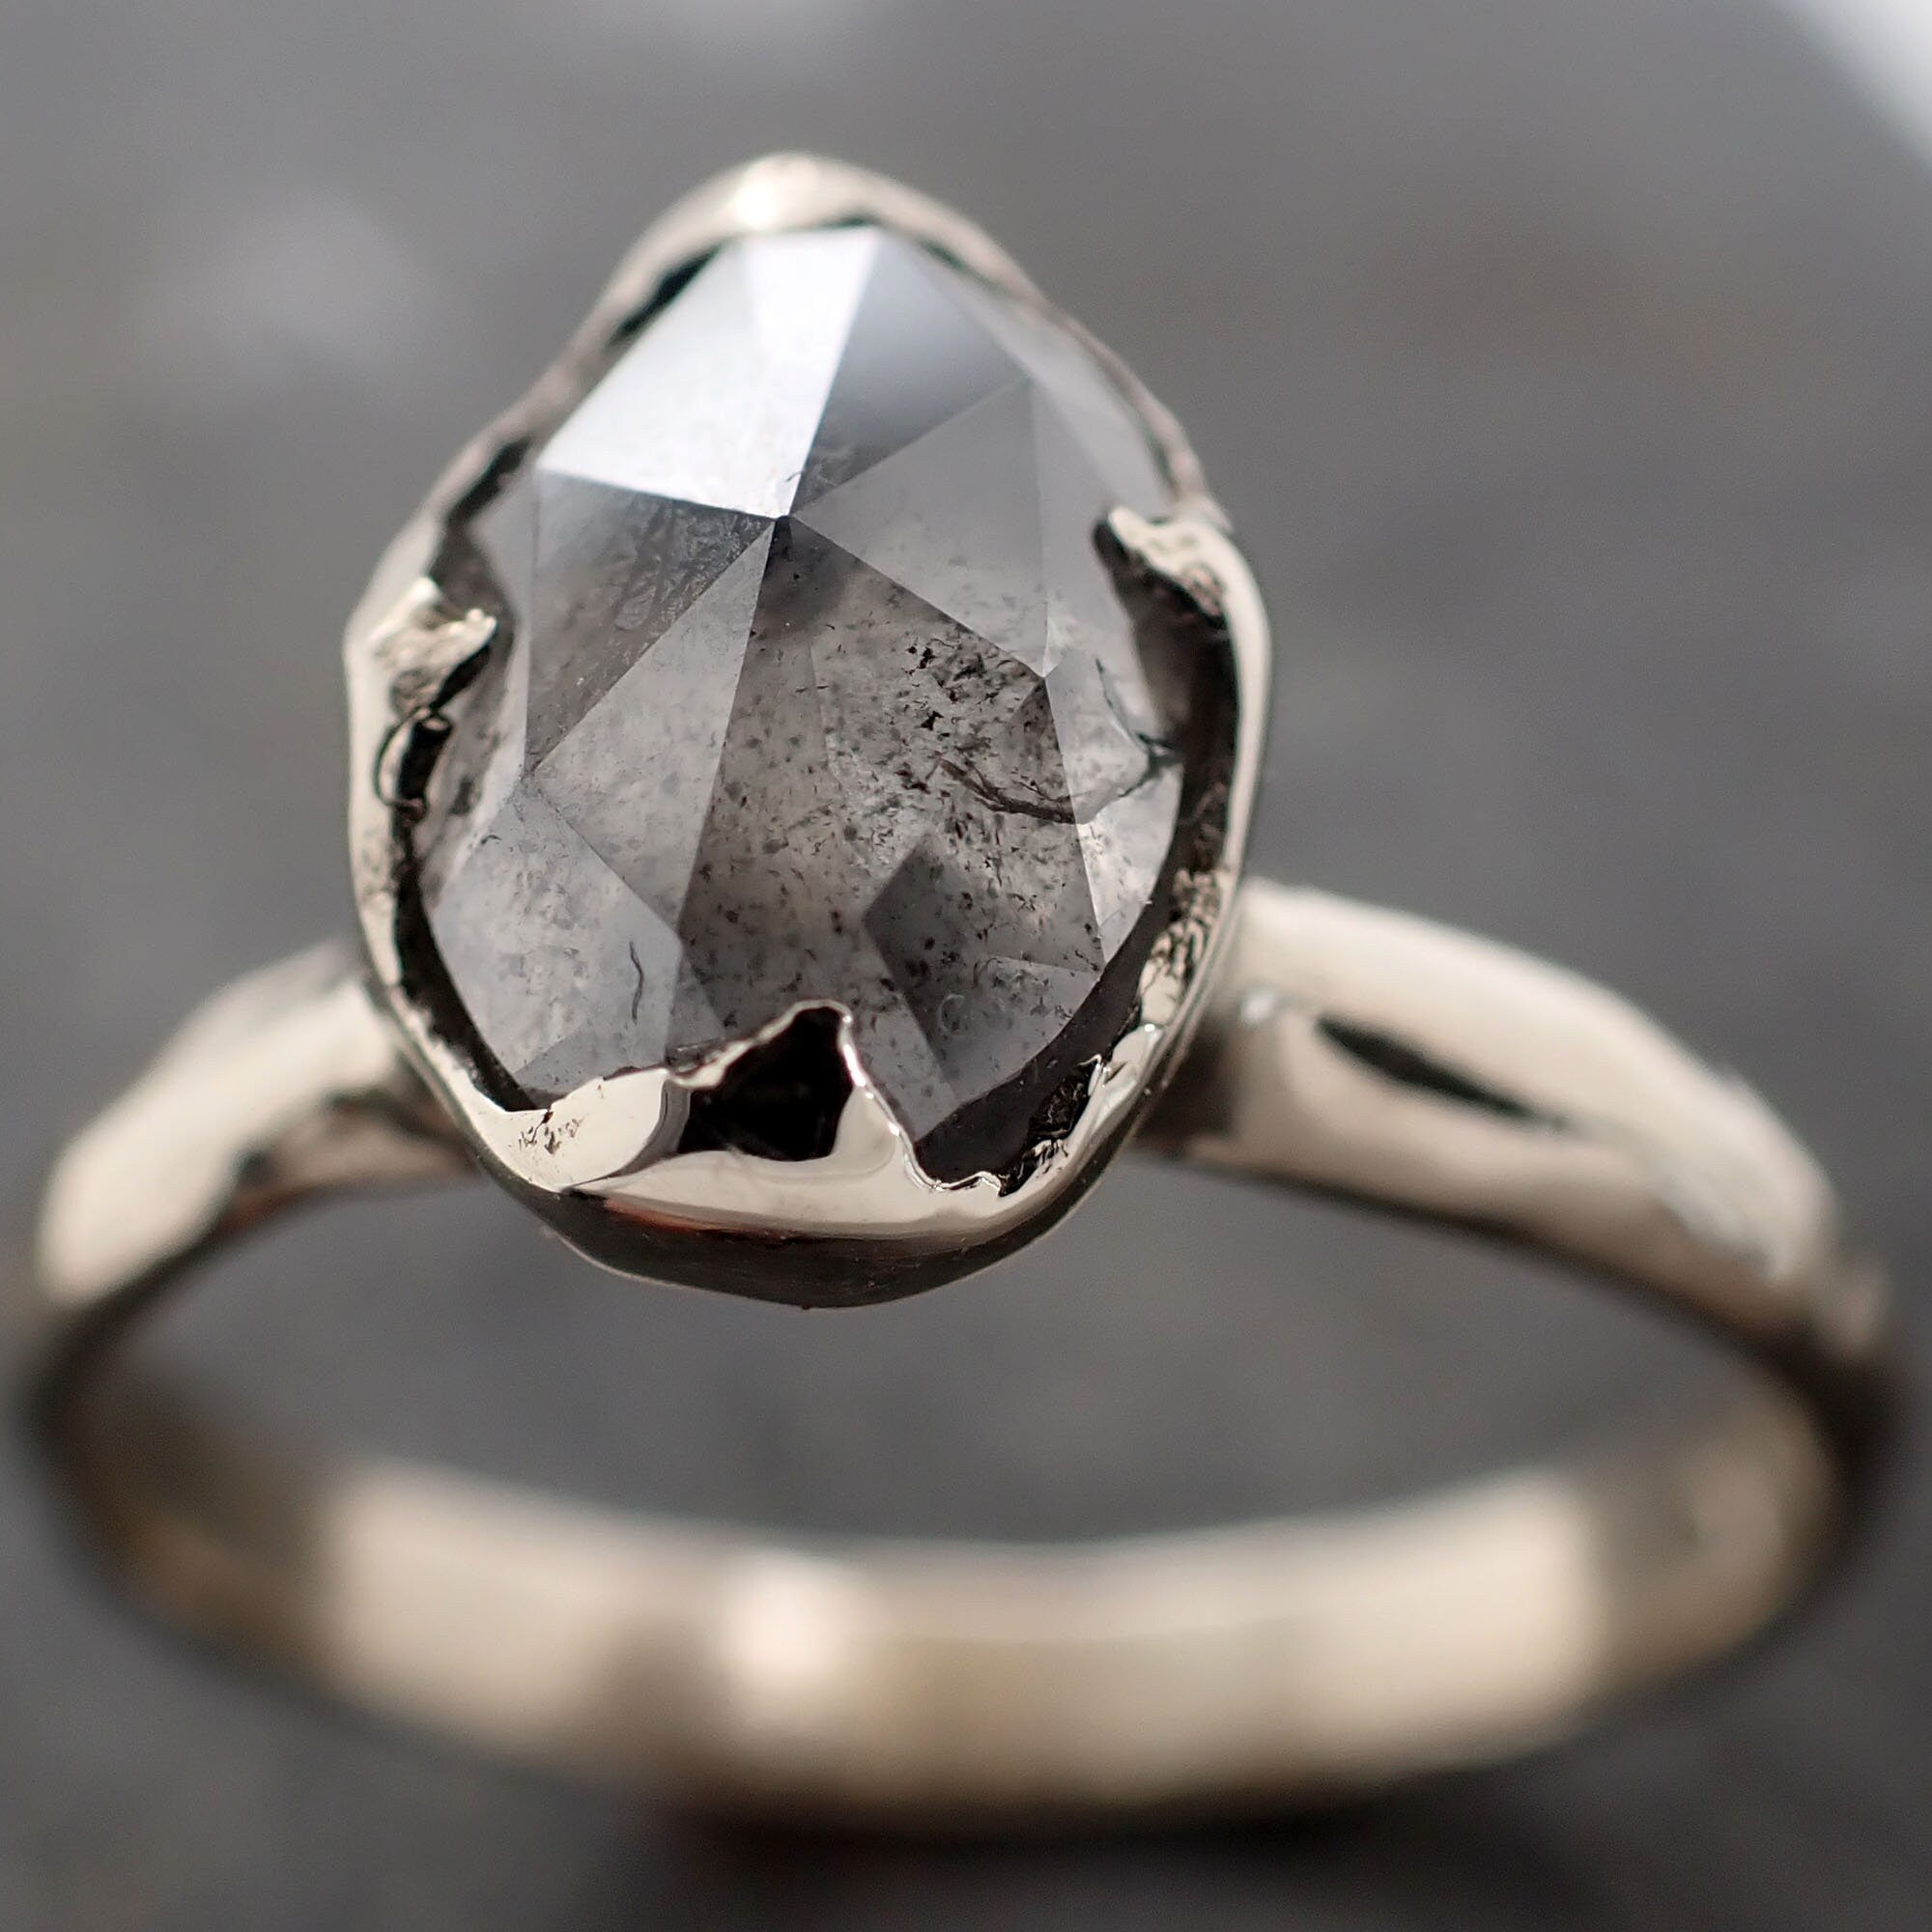 Fancy cut salt and pepper Diamond Solitaire Engagement 18k White Gold Wedding Ring byAngeline 3023